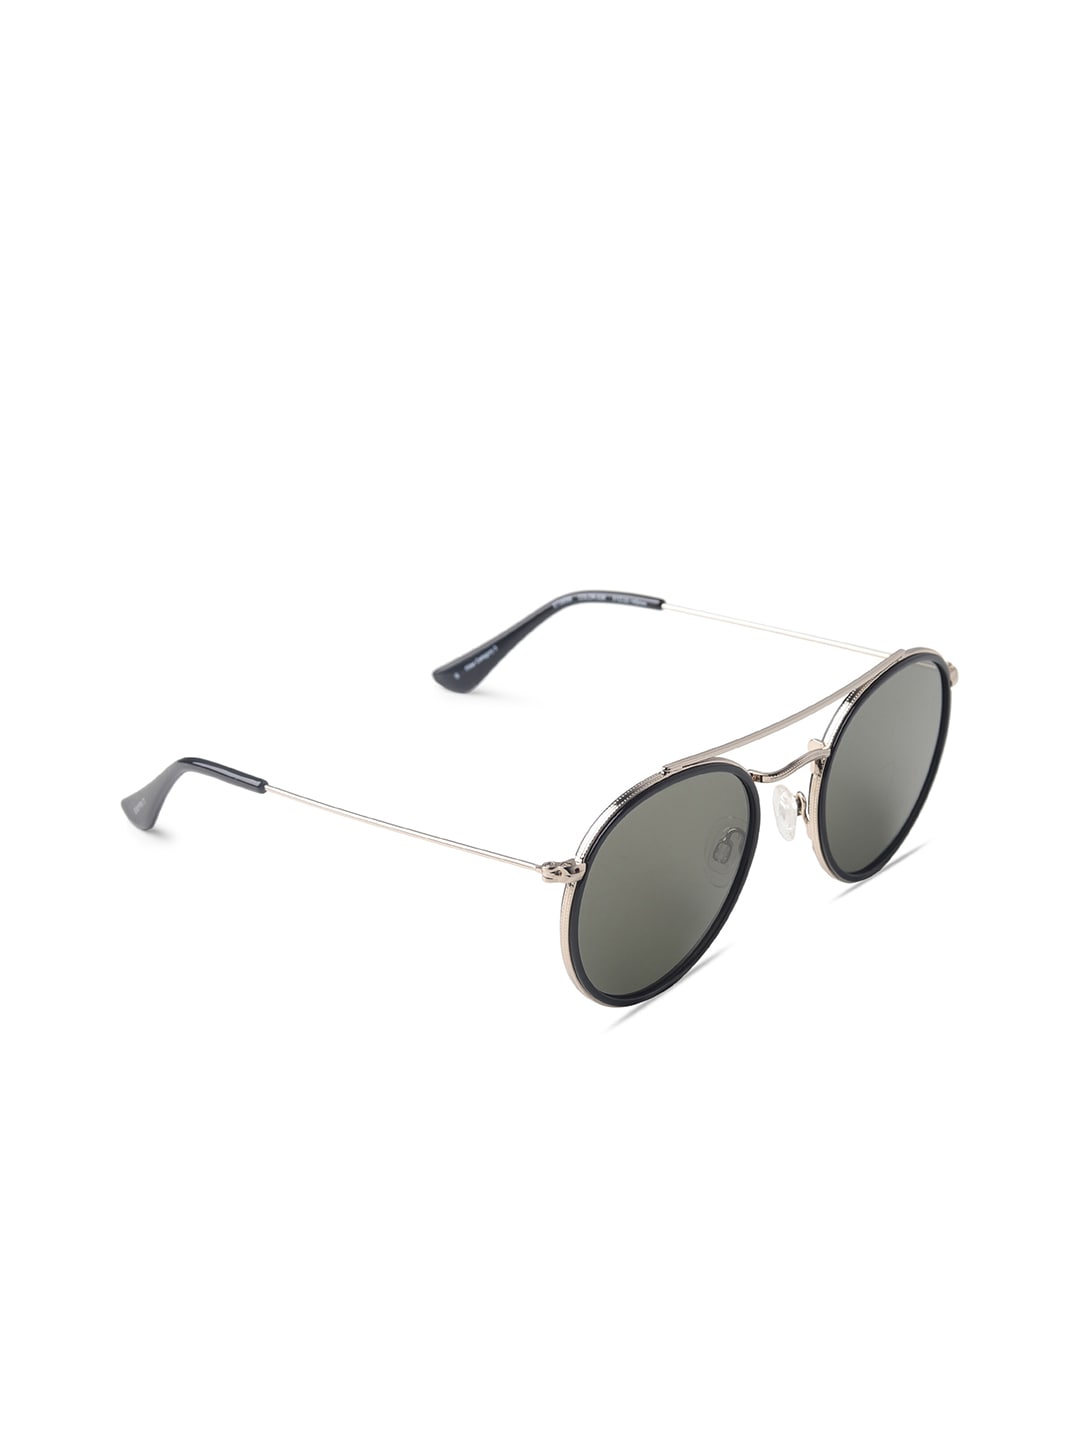 ESPRIT Women Grey Lens & Black Round Sunglasses with UV Protected Lens ET39099-51-538 Price in India